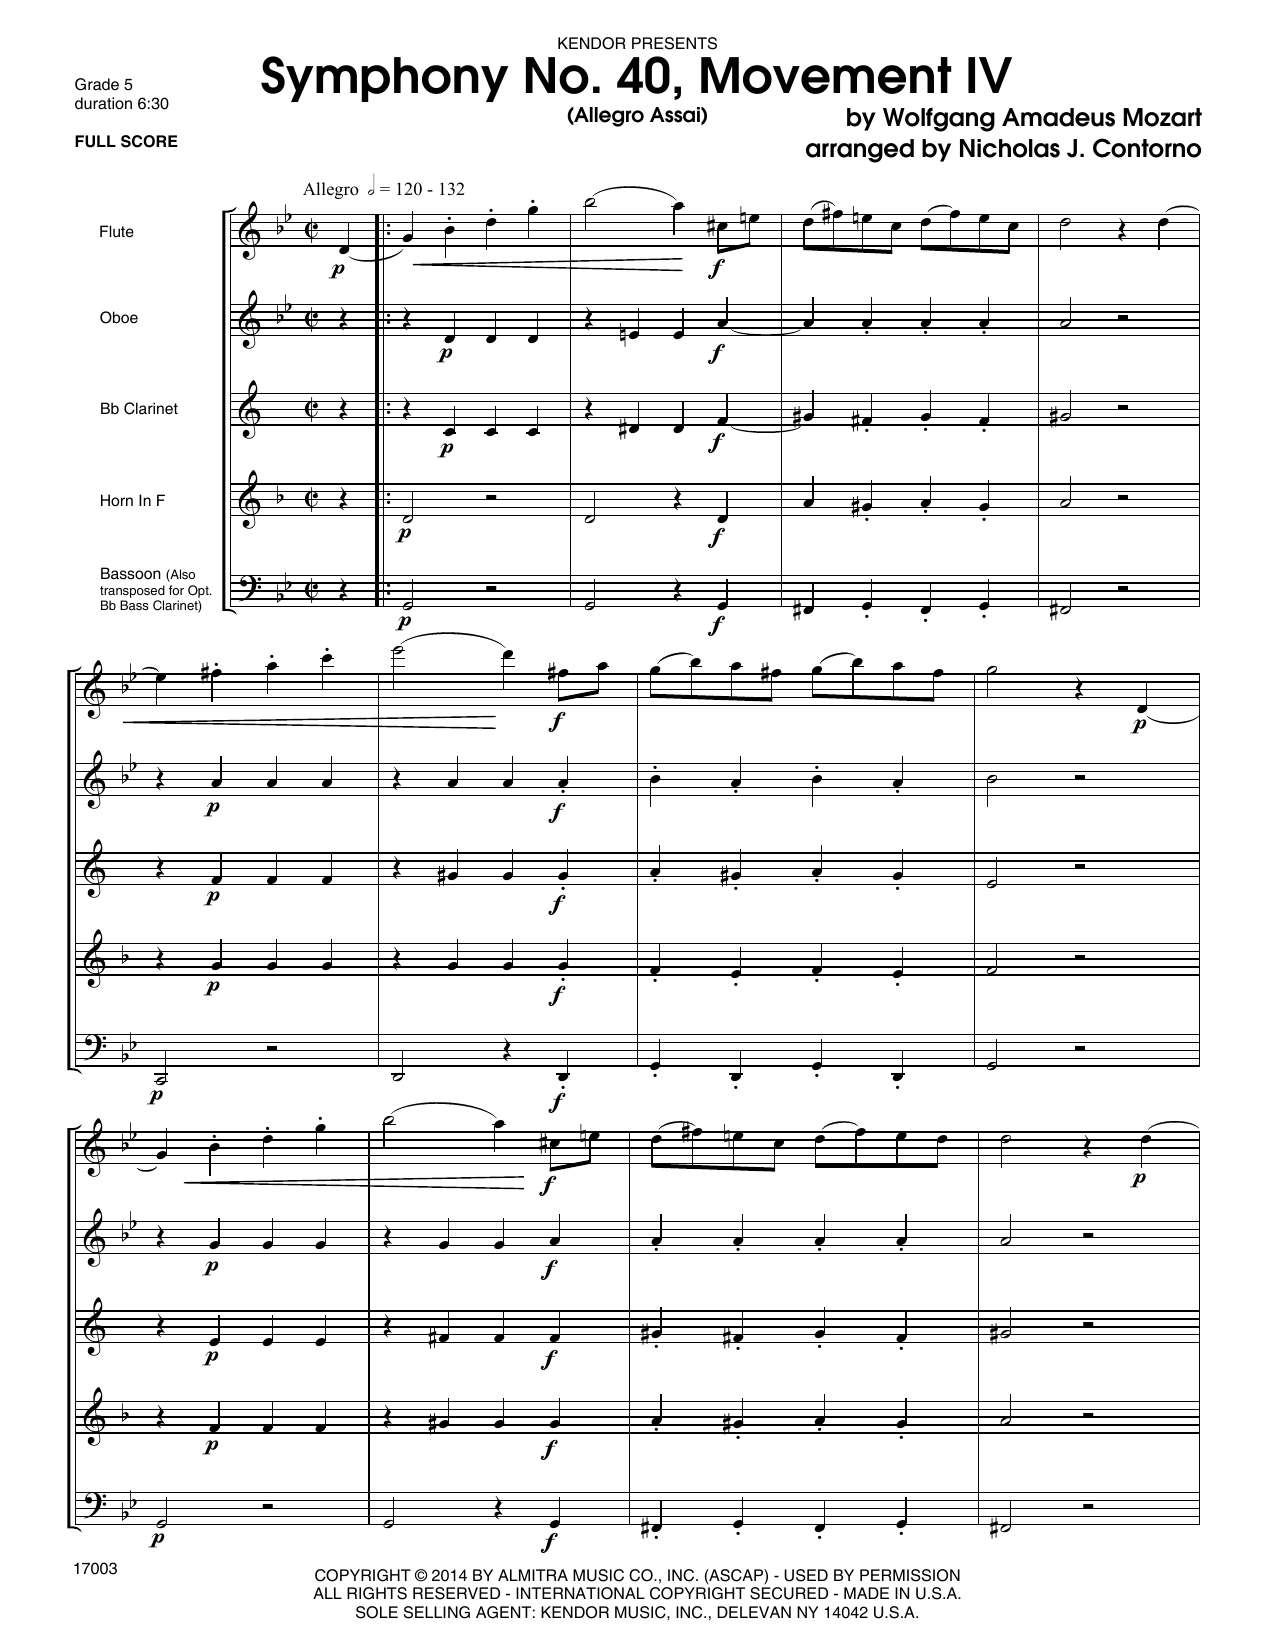 Download Nicholas Contorno Symphony No. 40, Movement IV (Allegro A Sheet Music